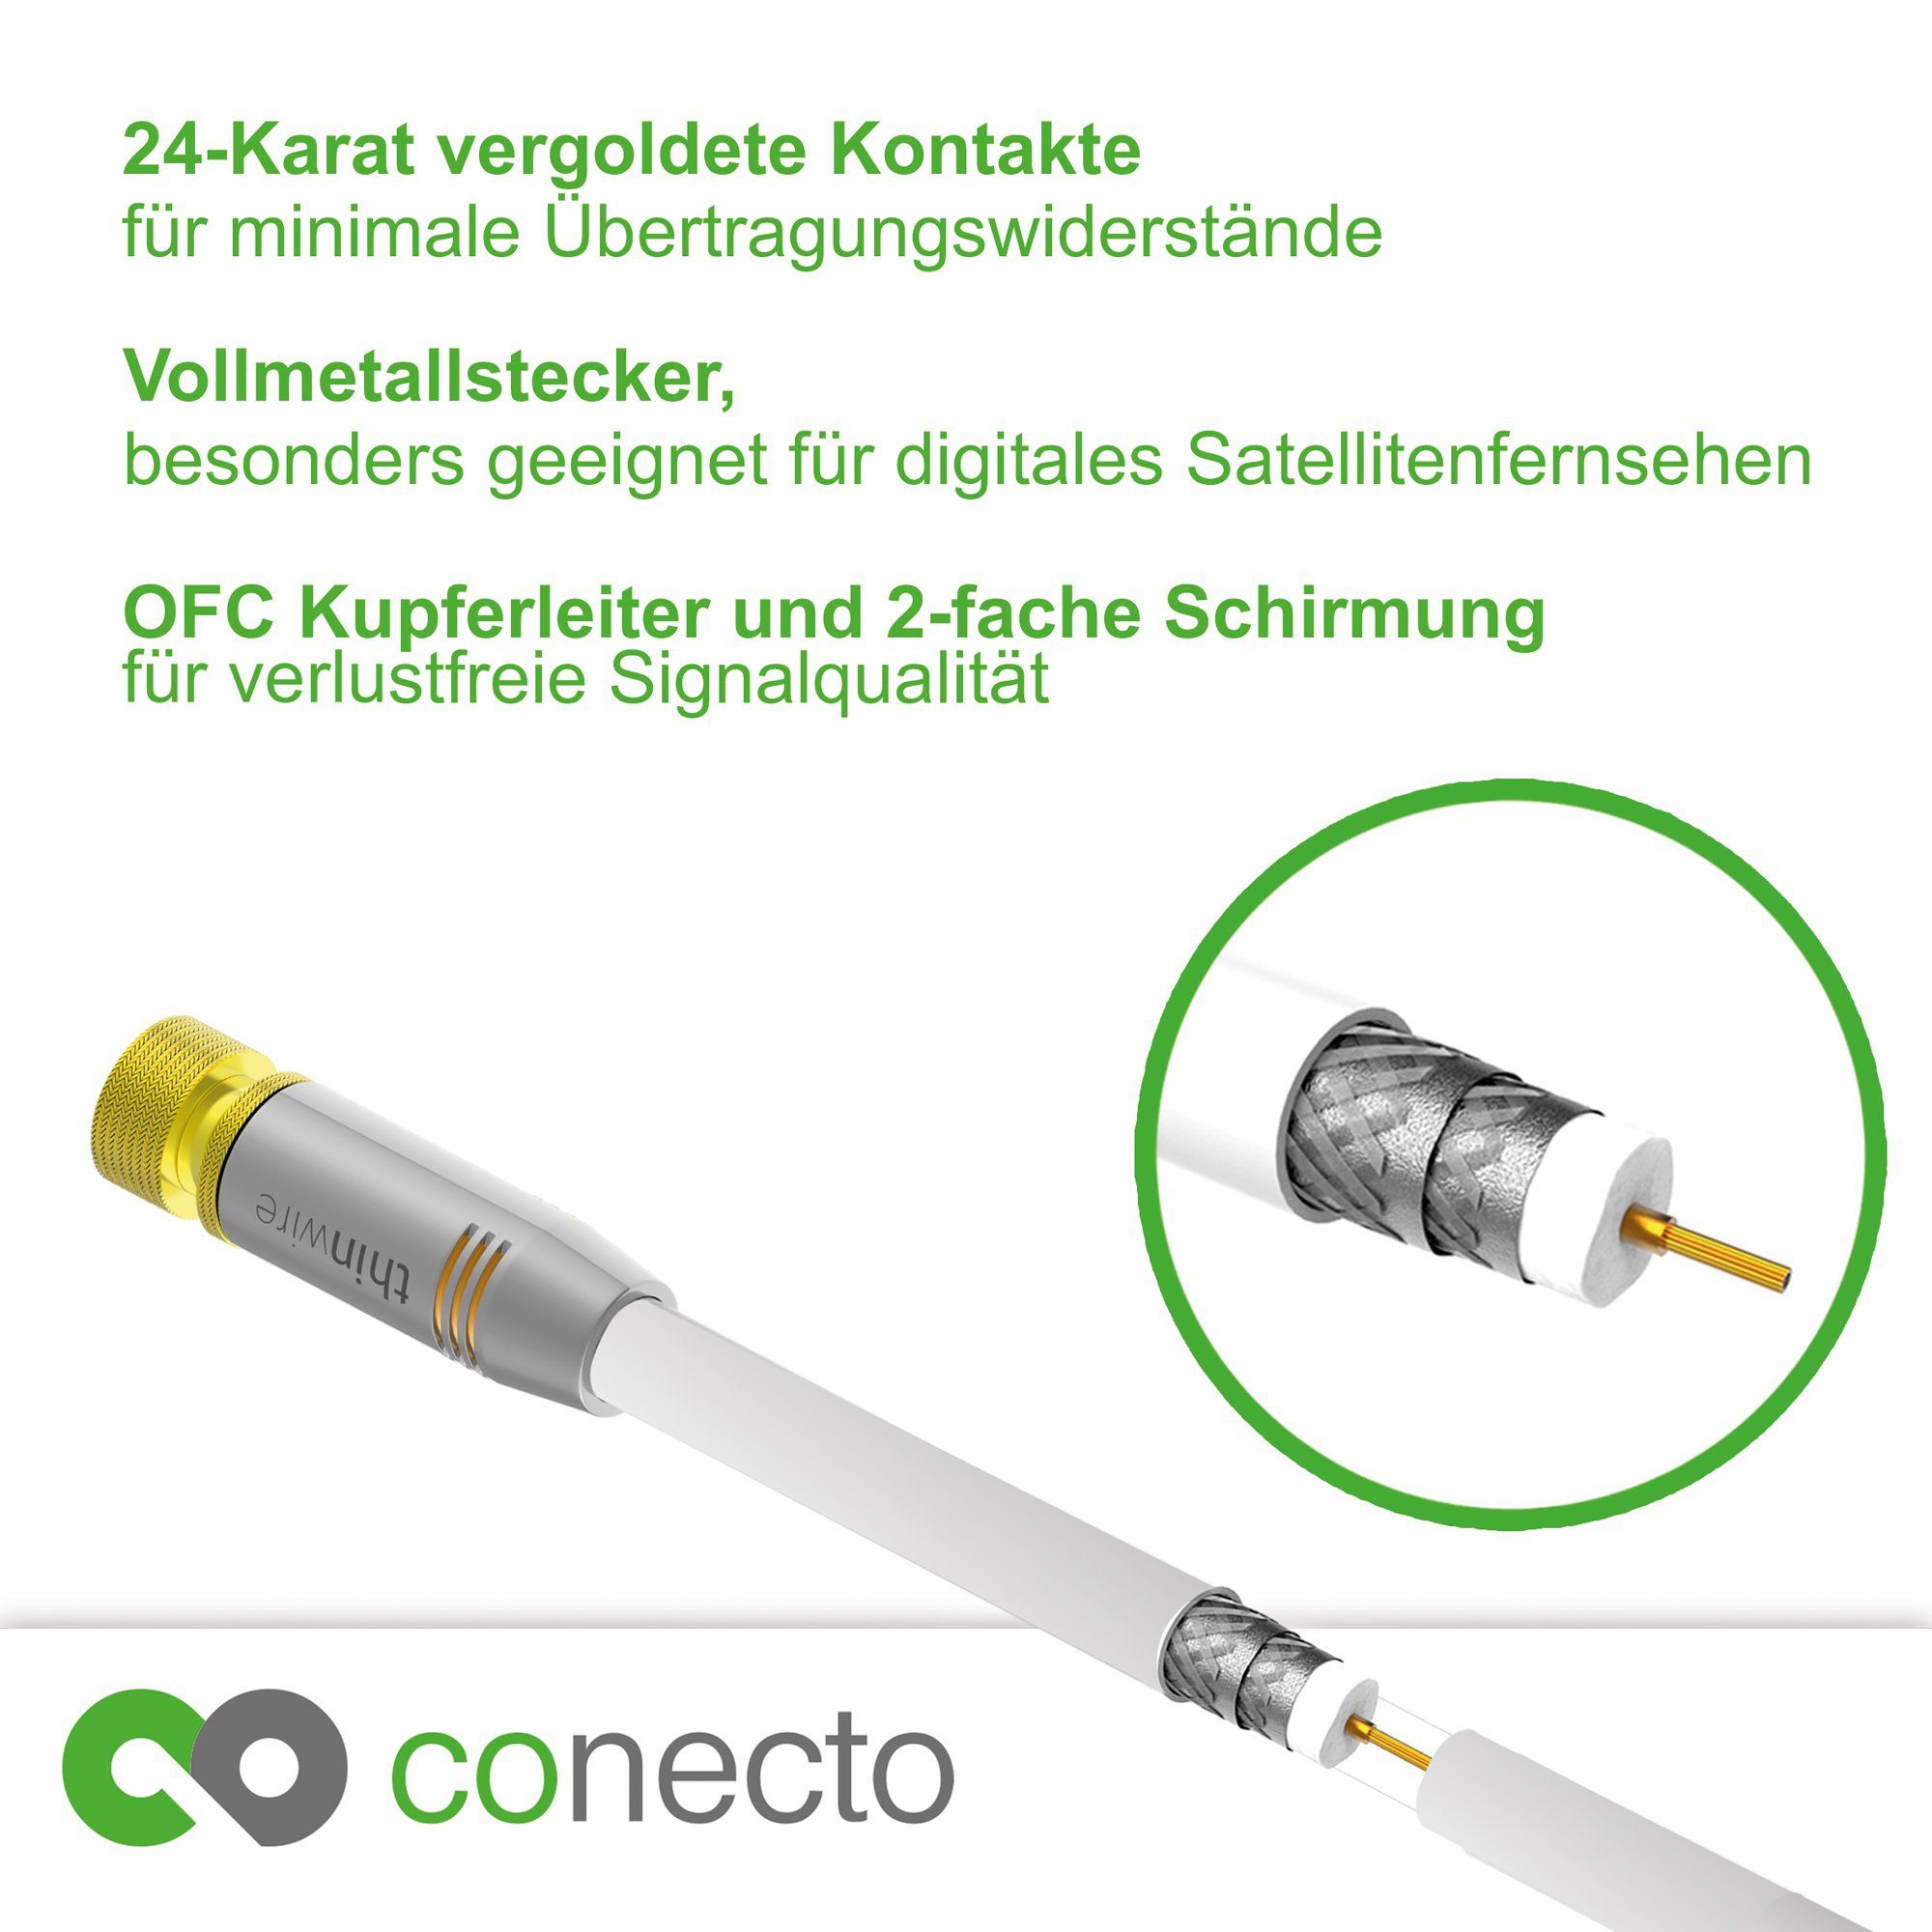 Premium HDTV Anschlusskabel cm) SAT conecto SAT-Kabel, thinwire (Koaxialkabel, (200 conecto F-Stec